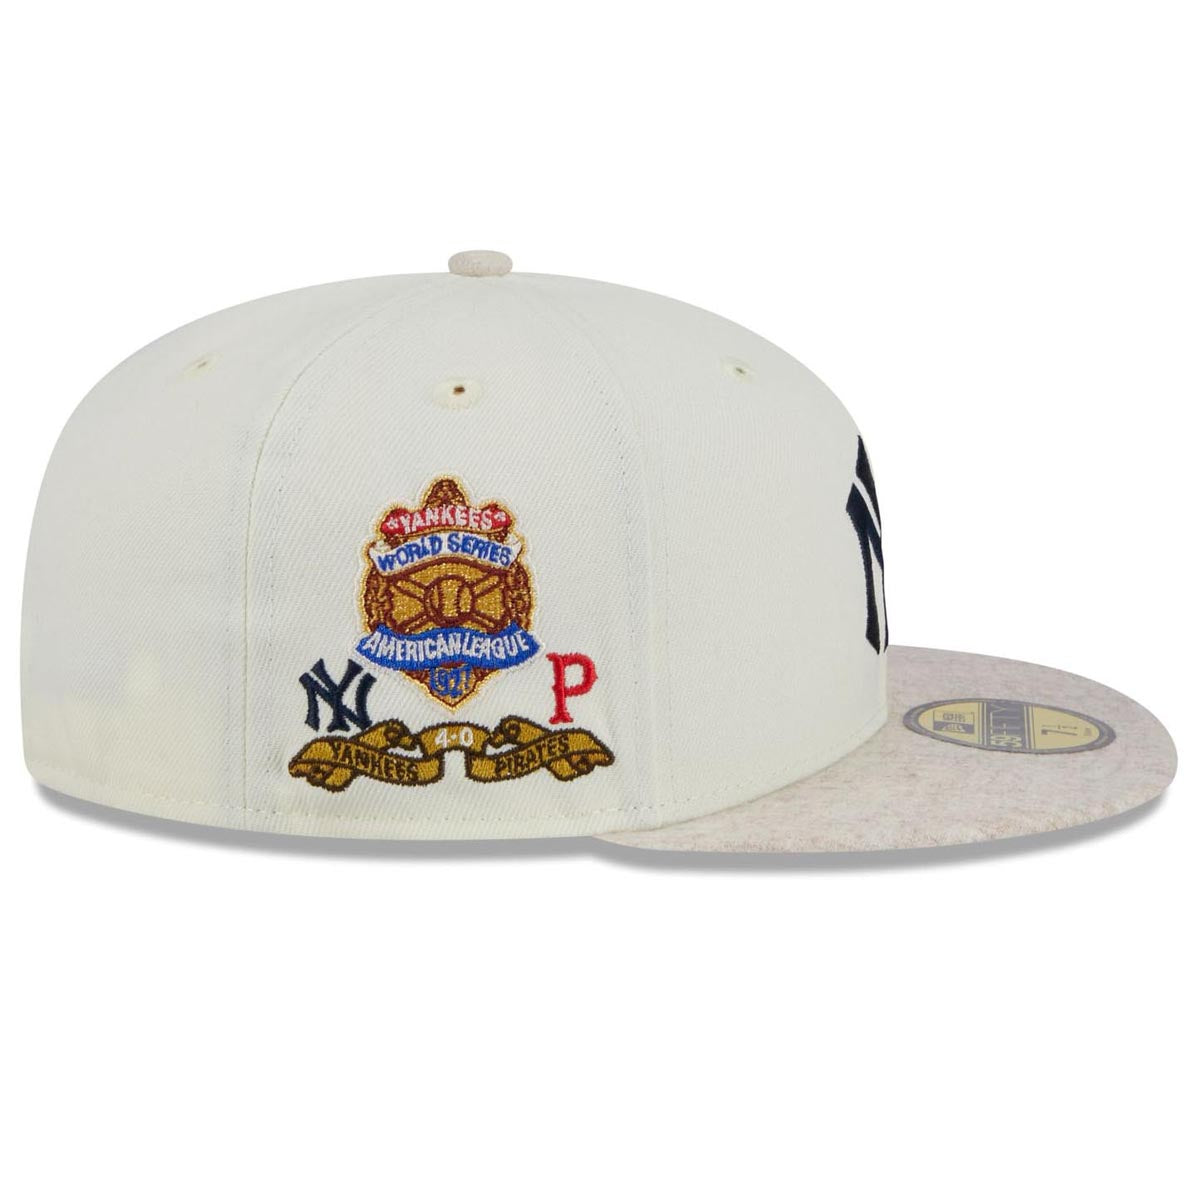 New Era 5950 Match-up Hat - New York Yankees image 4